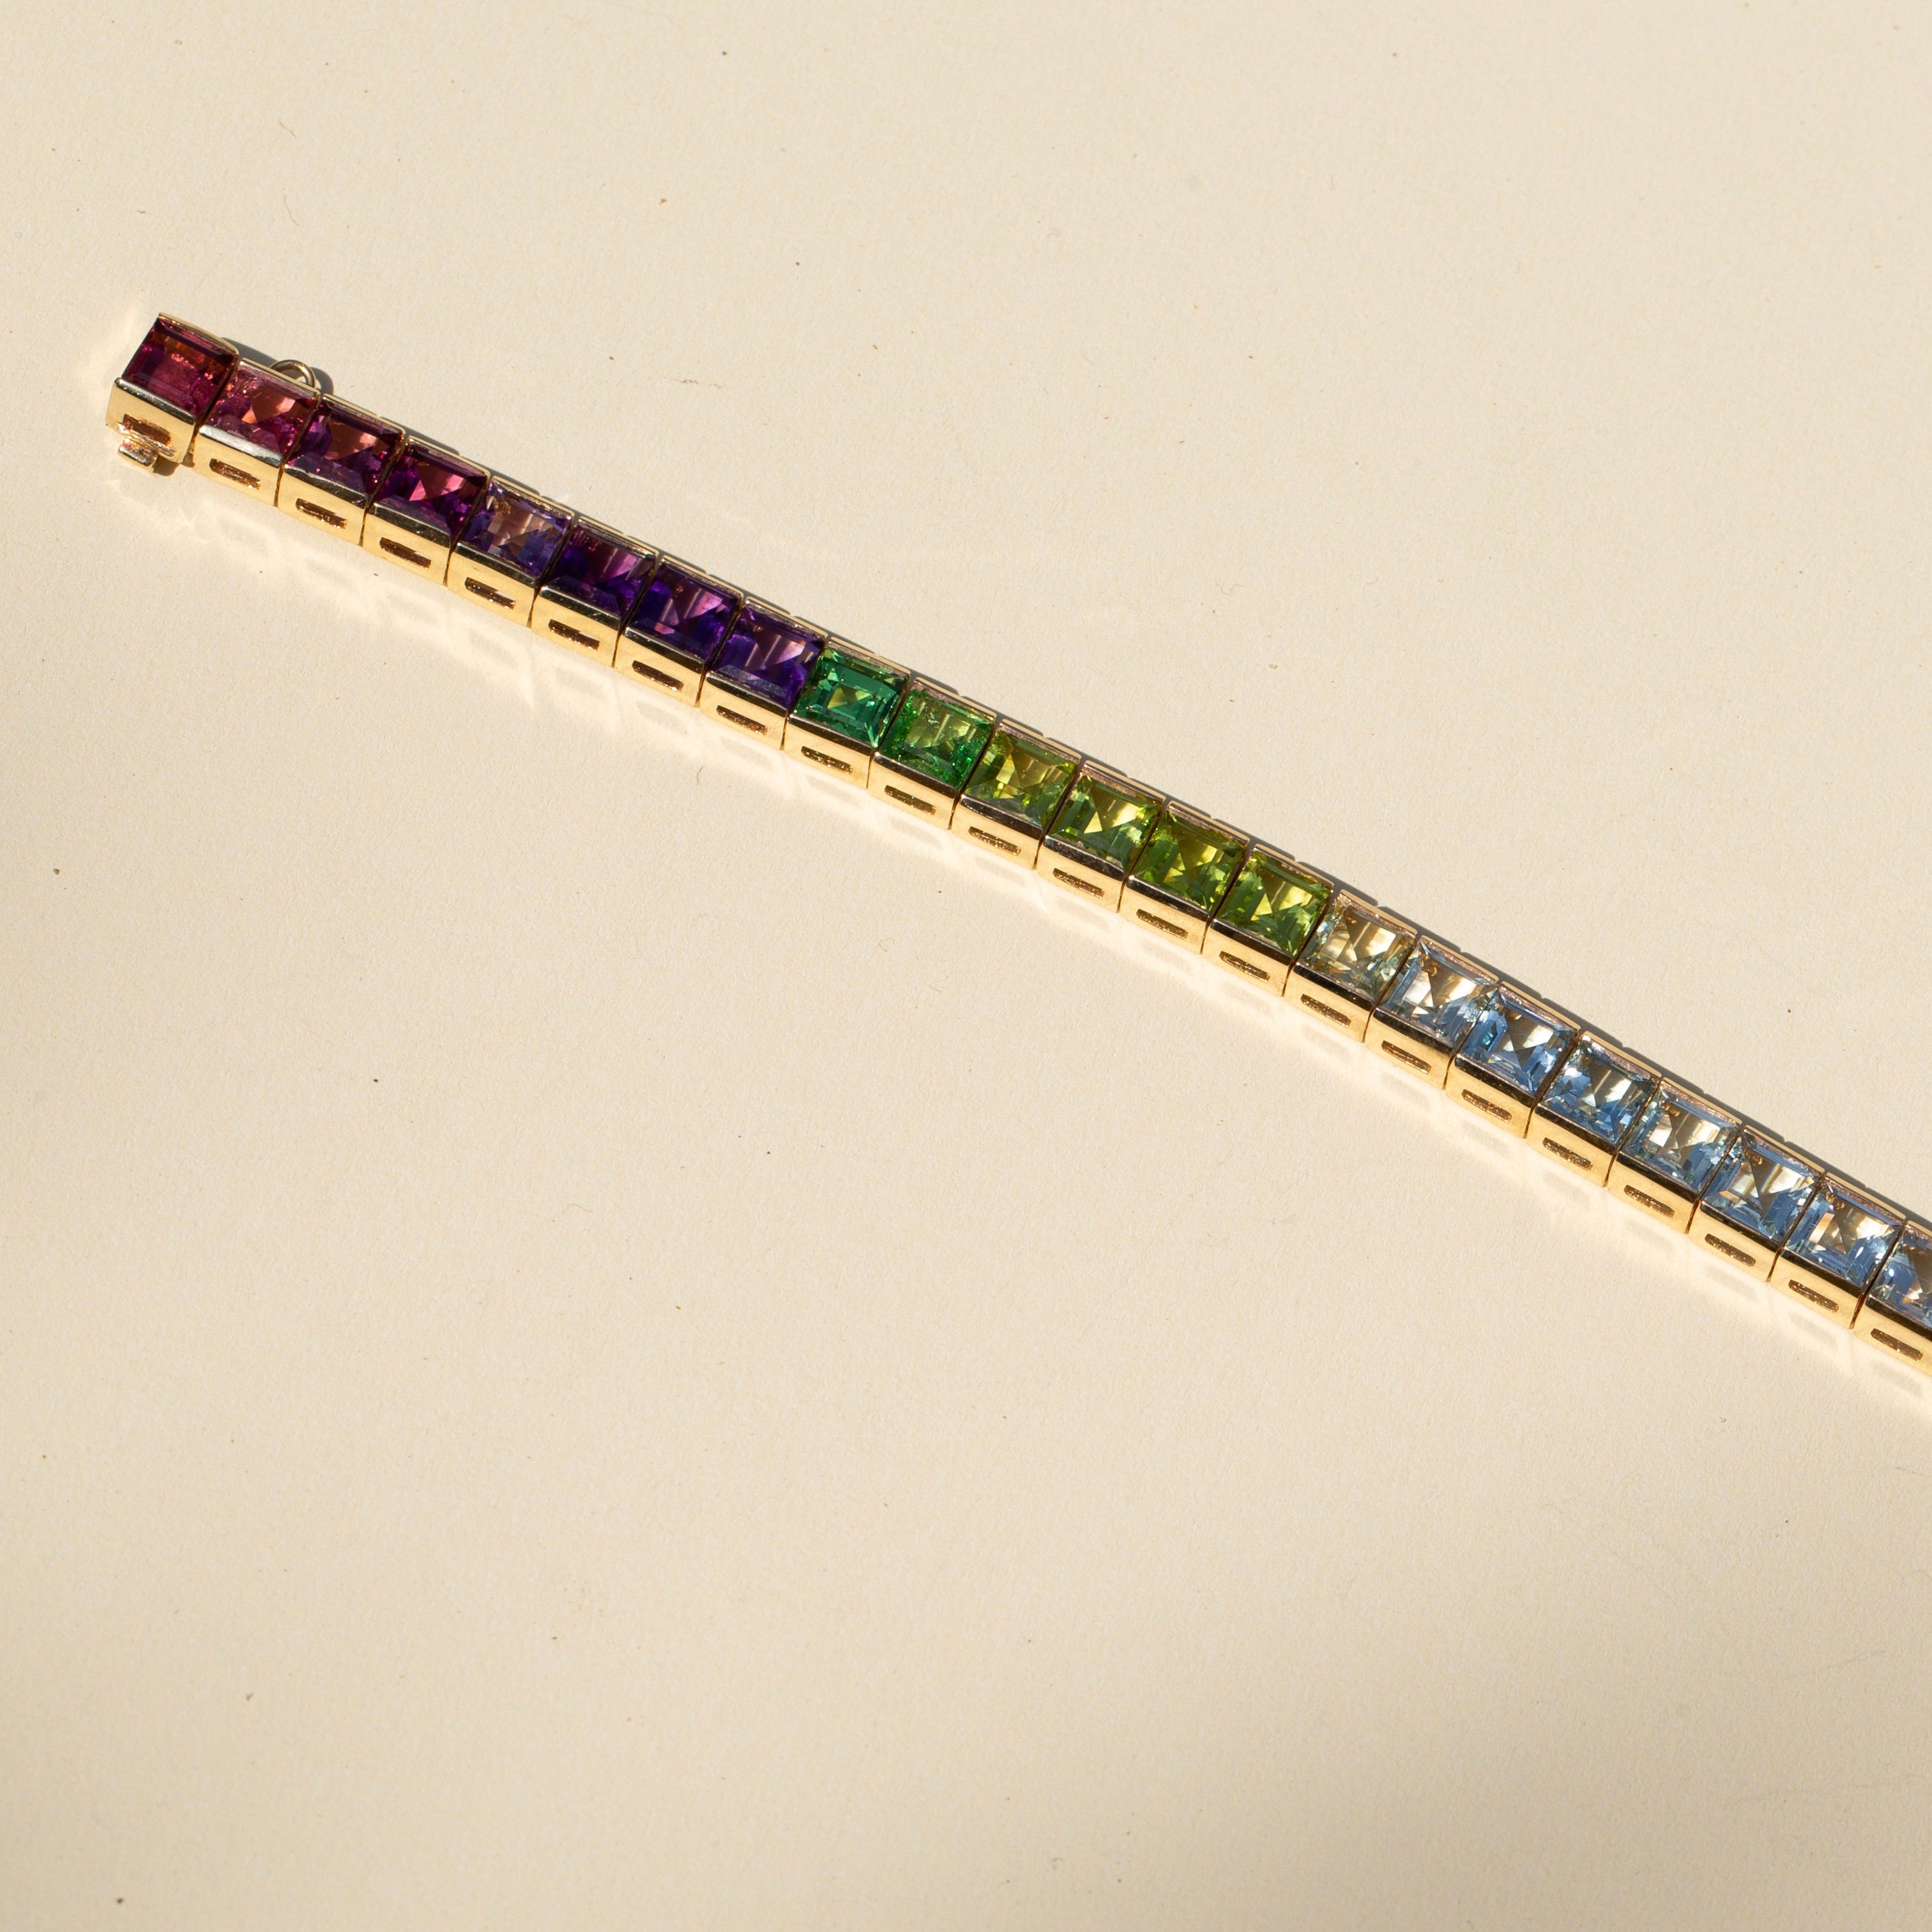 Rainbow Multi Stone and 18K Gold Line Bracelet